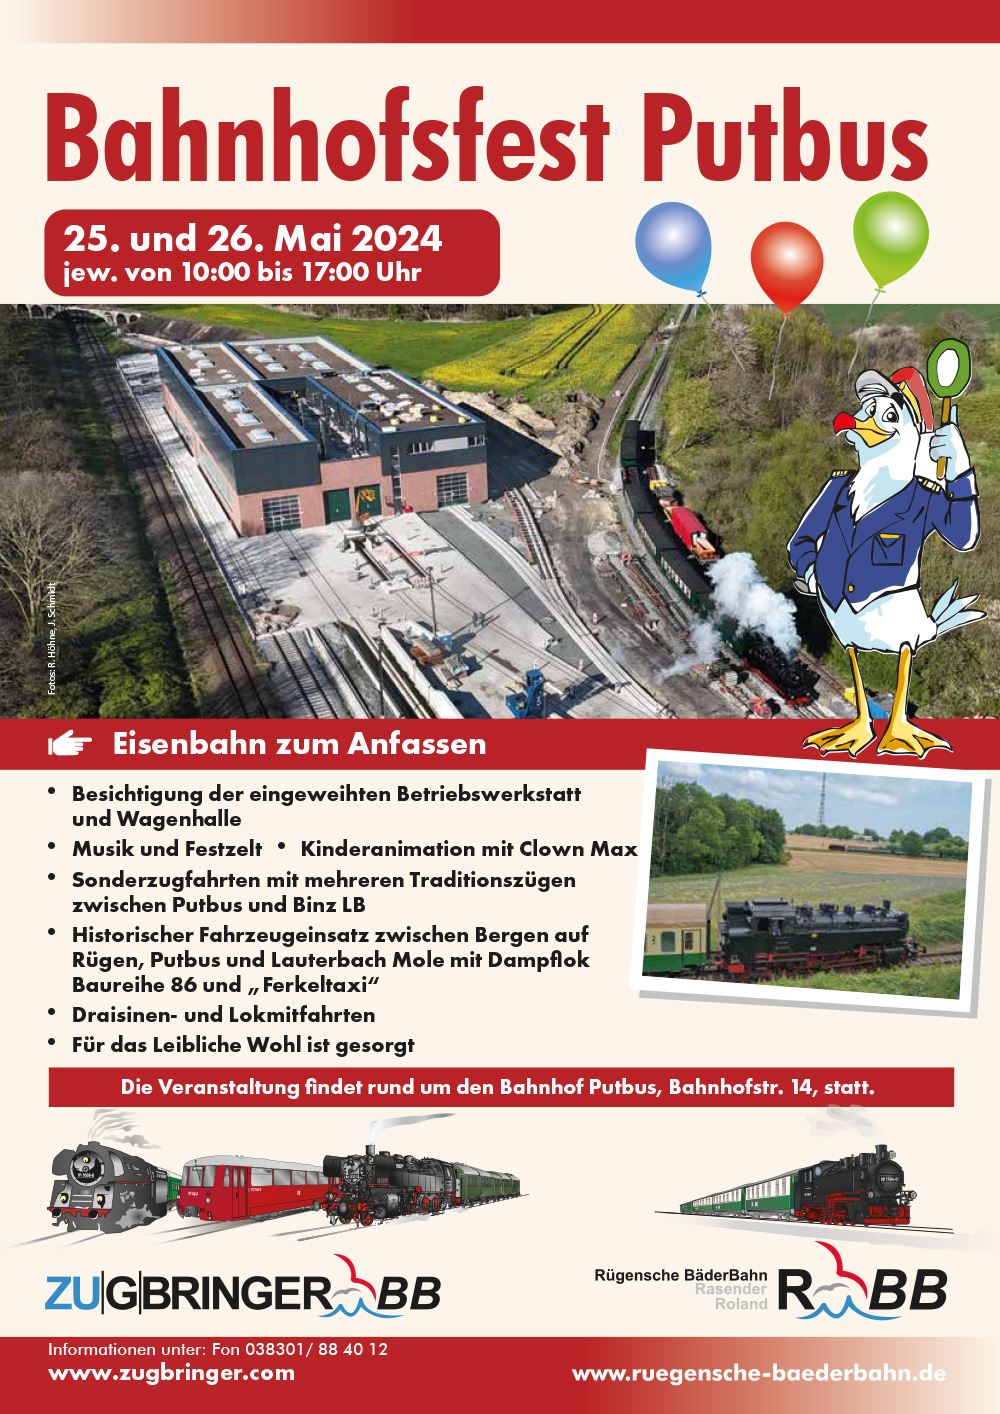 Bahnhofsfest Putbus